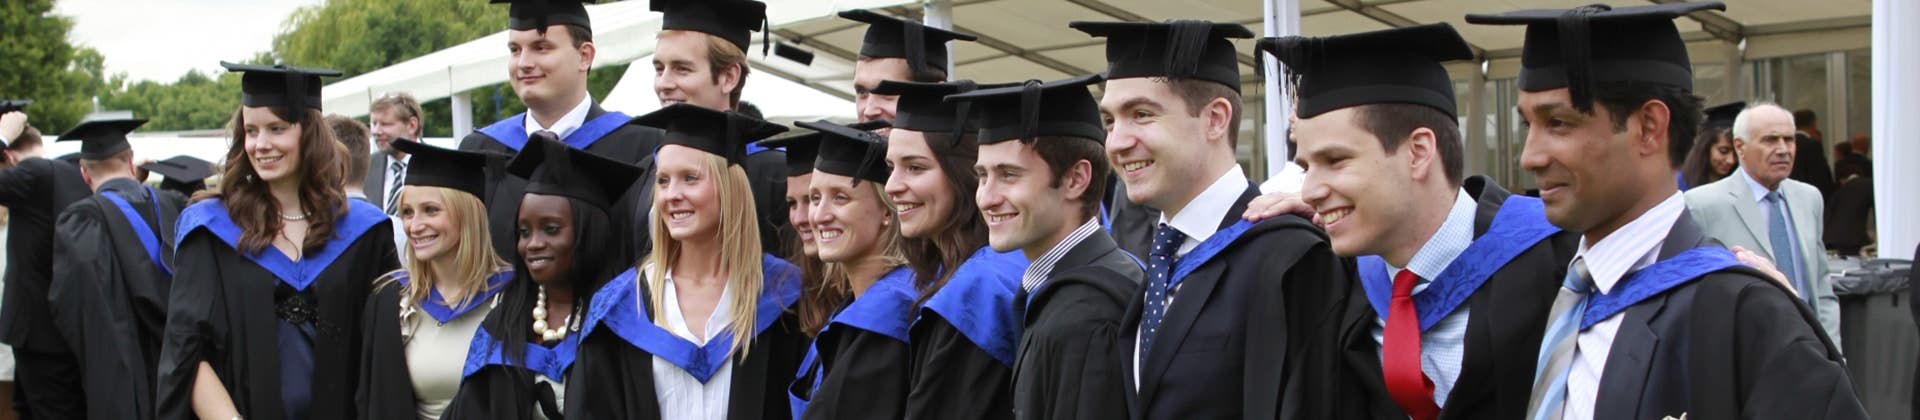 Surrey graduates